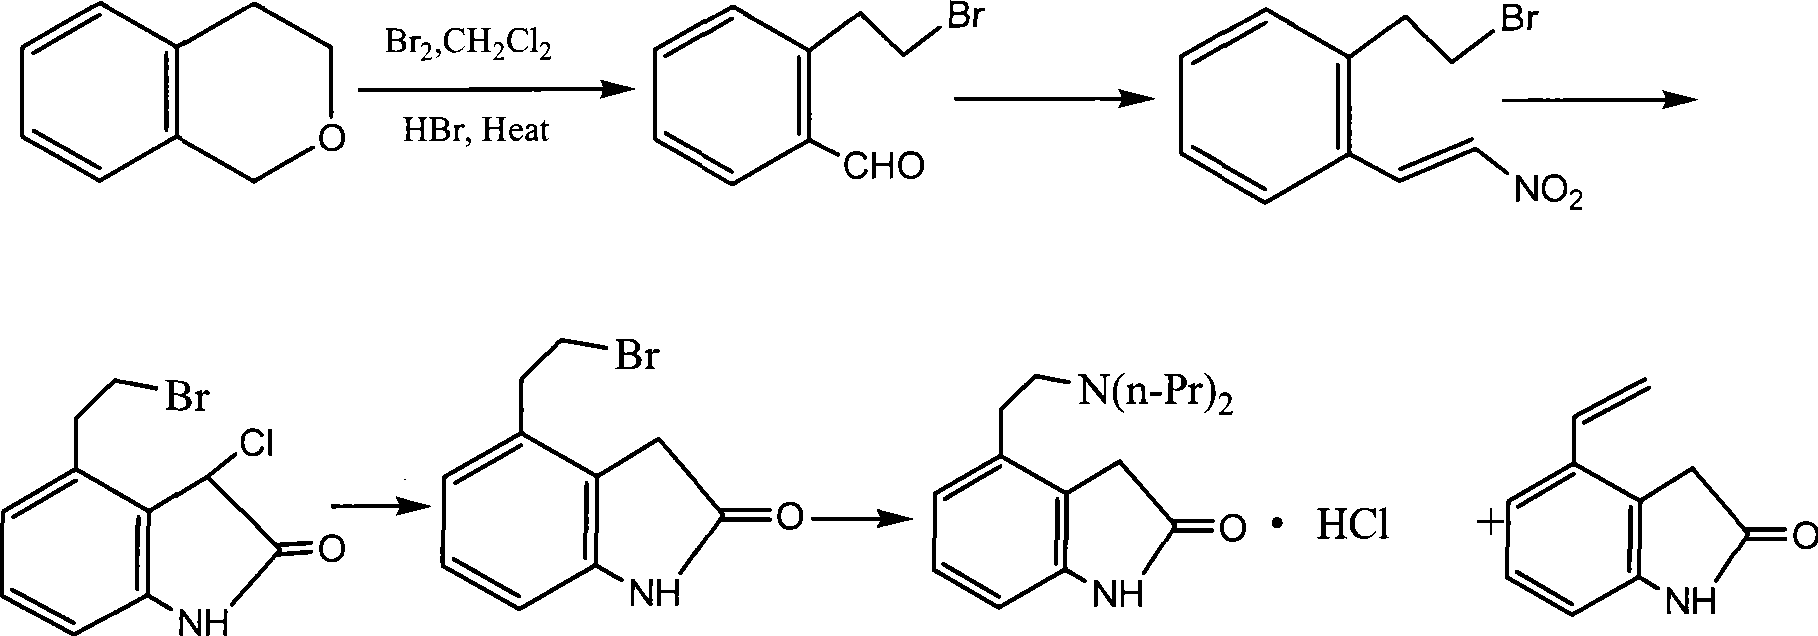 Preparation of ropinirole hydrochloride